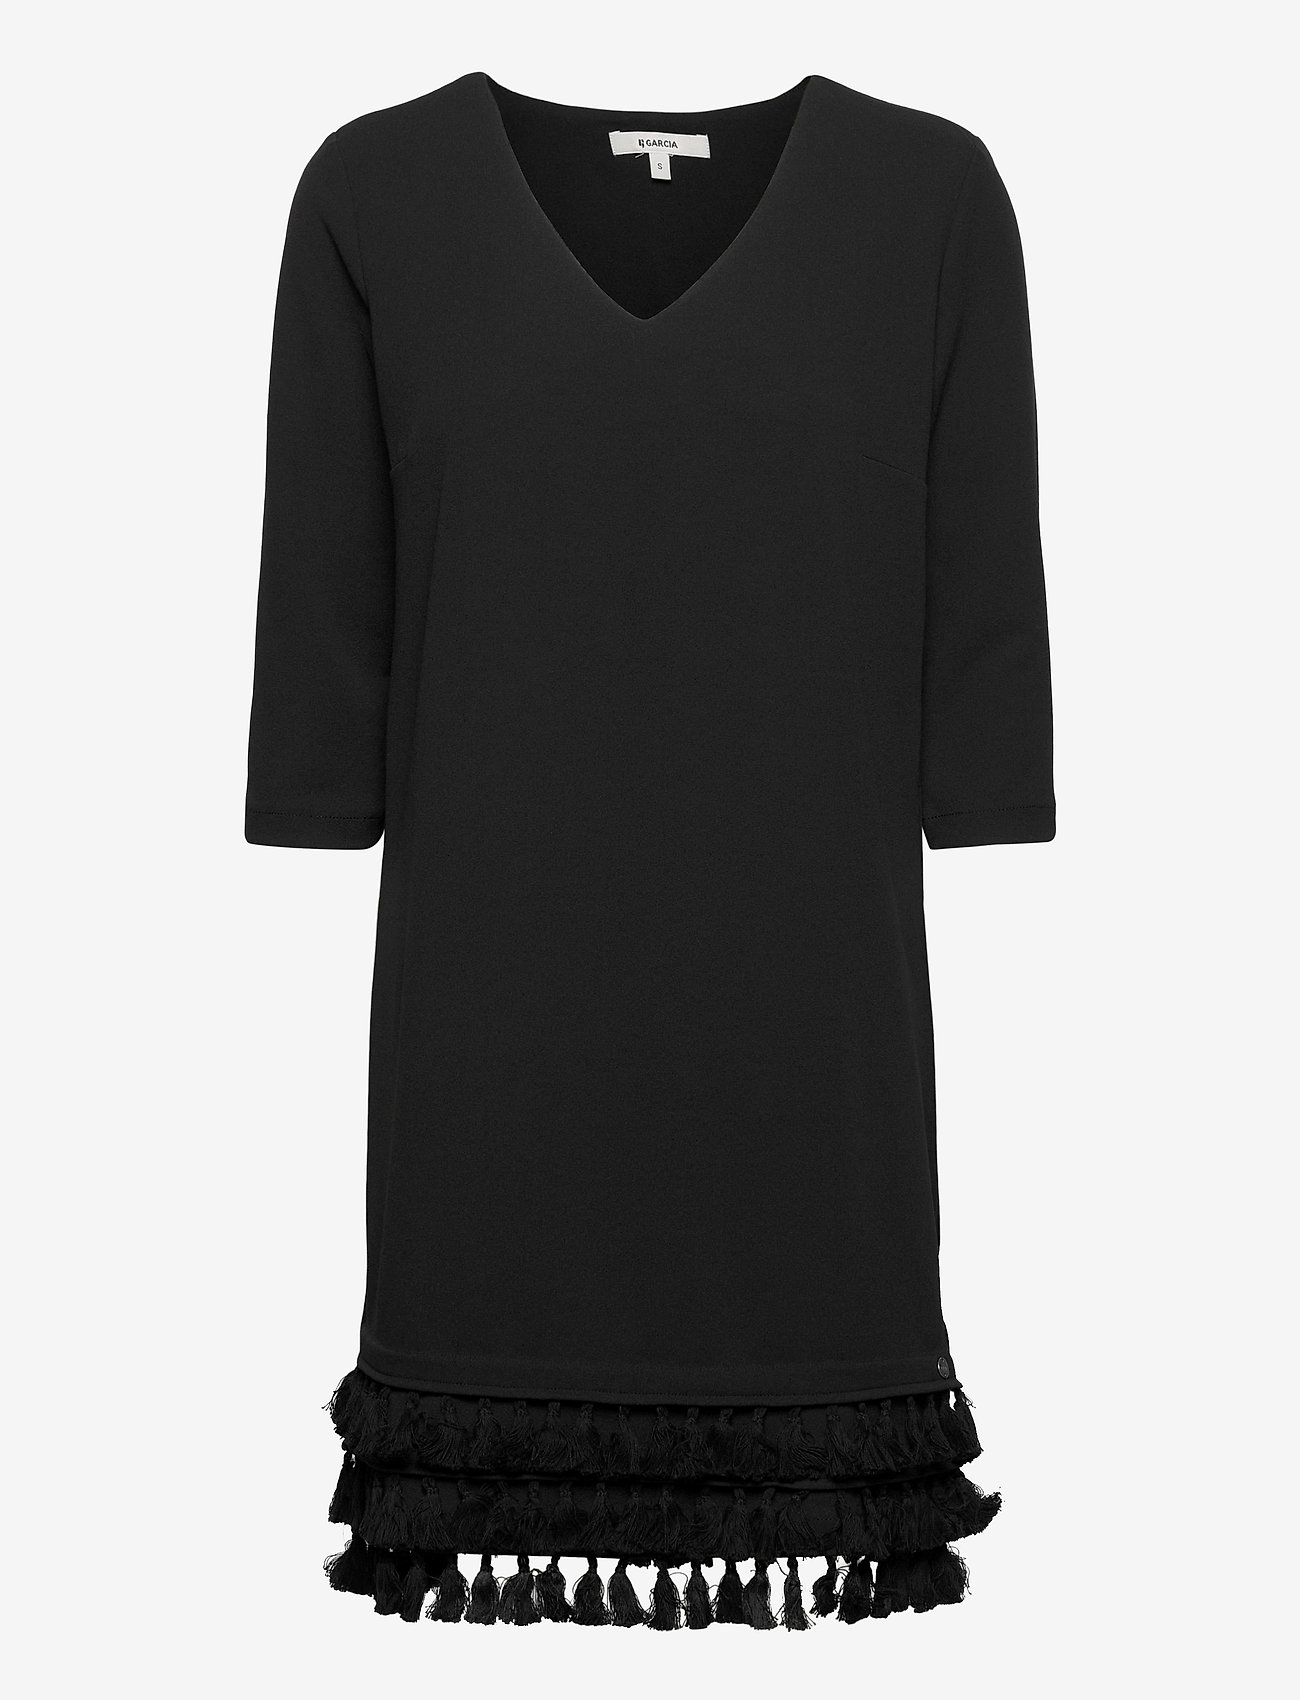 Garcia - ladies dress - korta klänningar - black - 0